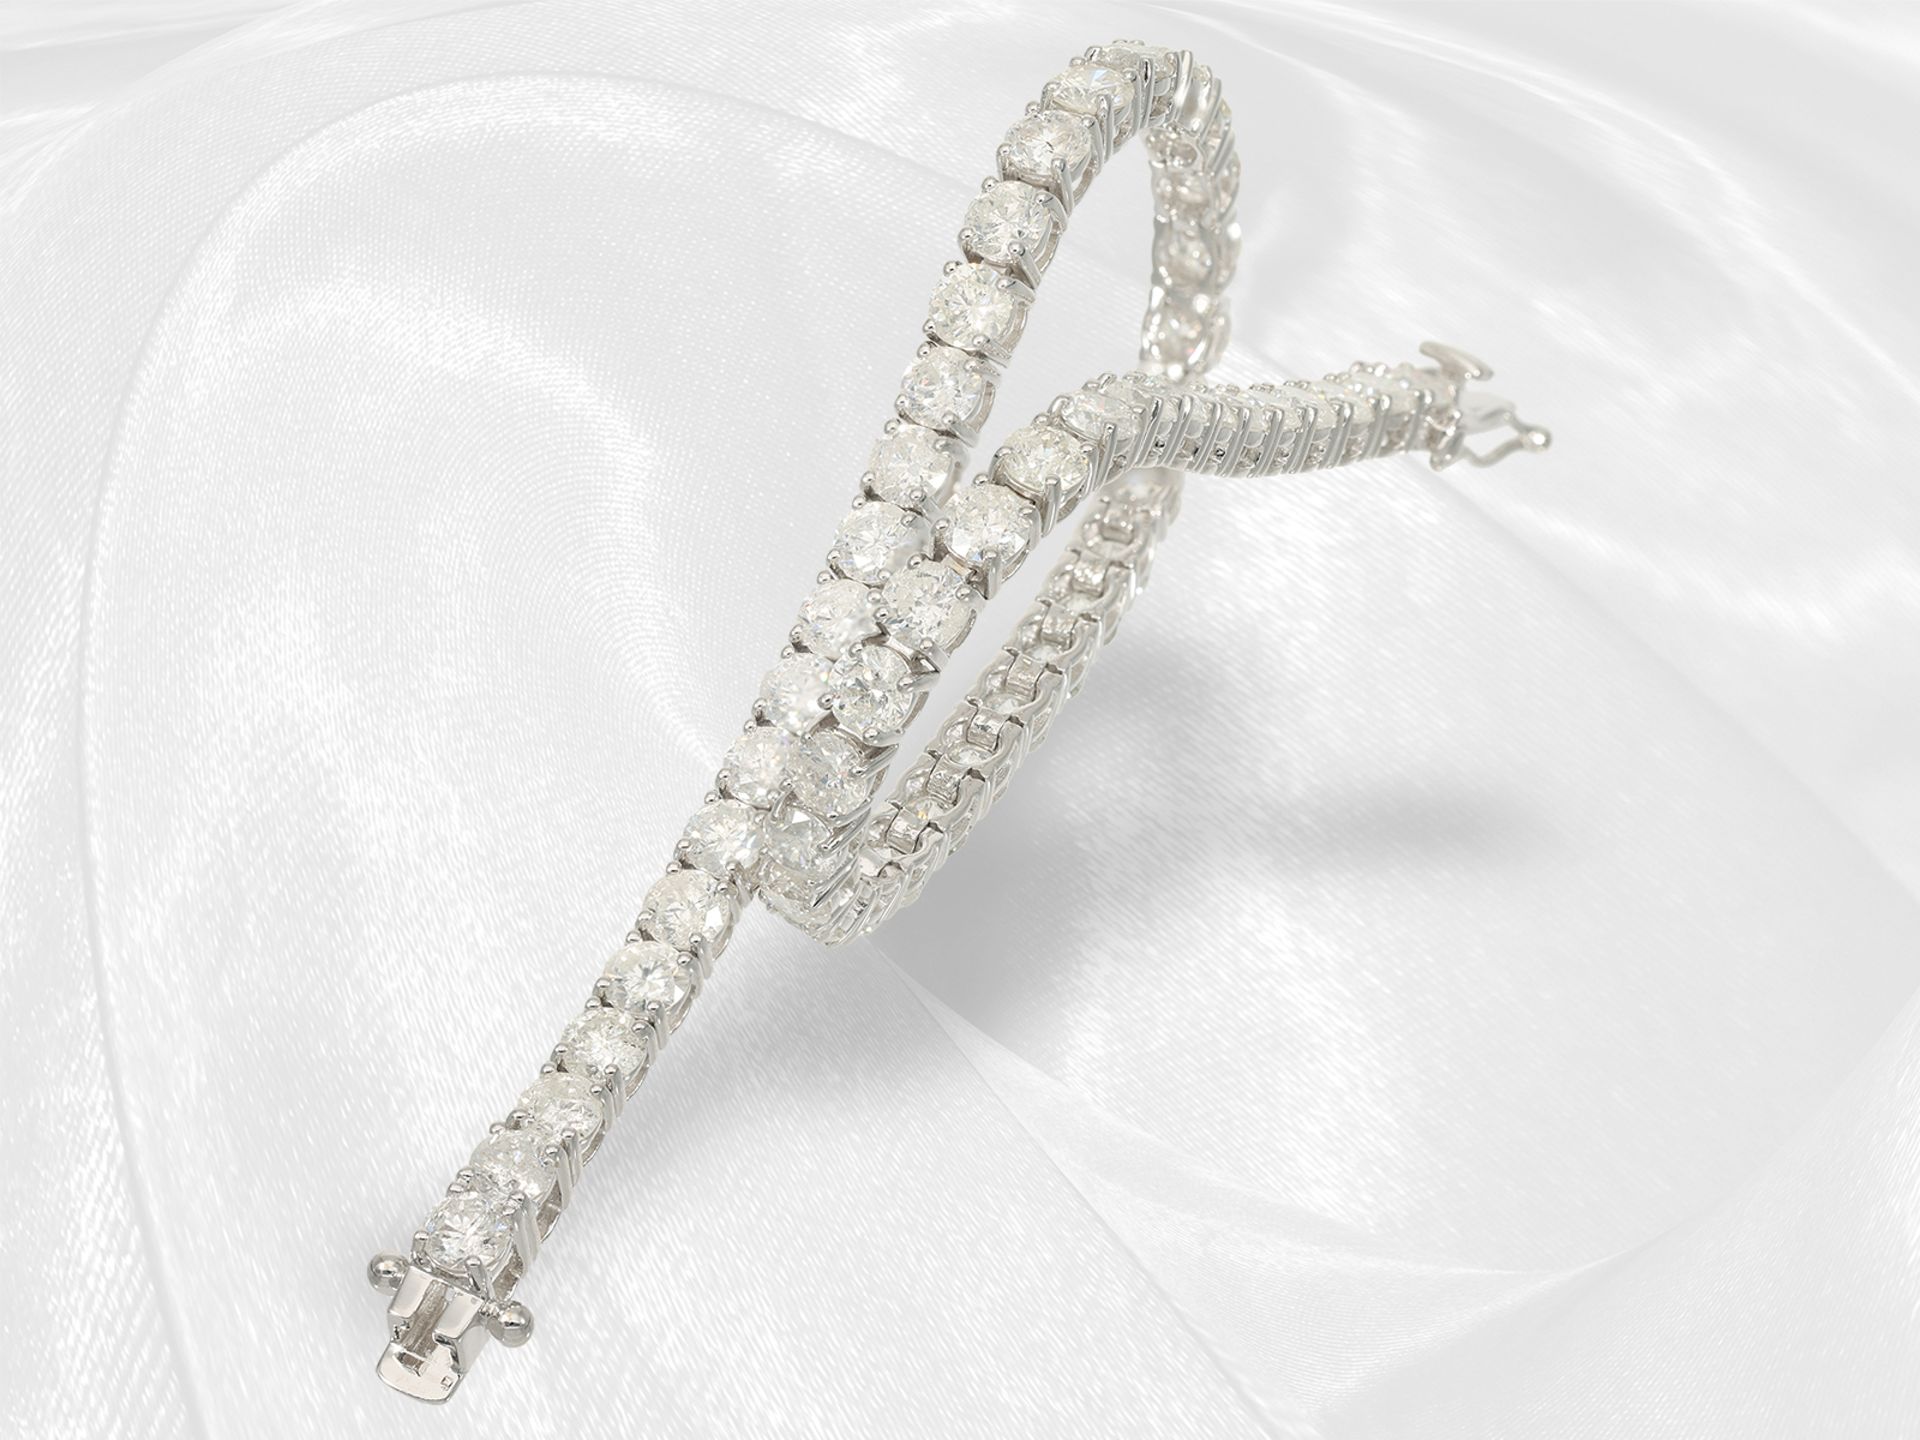 Bracelet: white gold tennis bracelet with 51 x 0.175ct white brilliant-cut diamonds, approx. 9ct